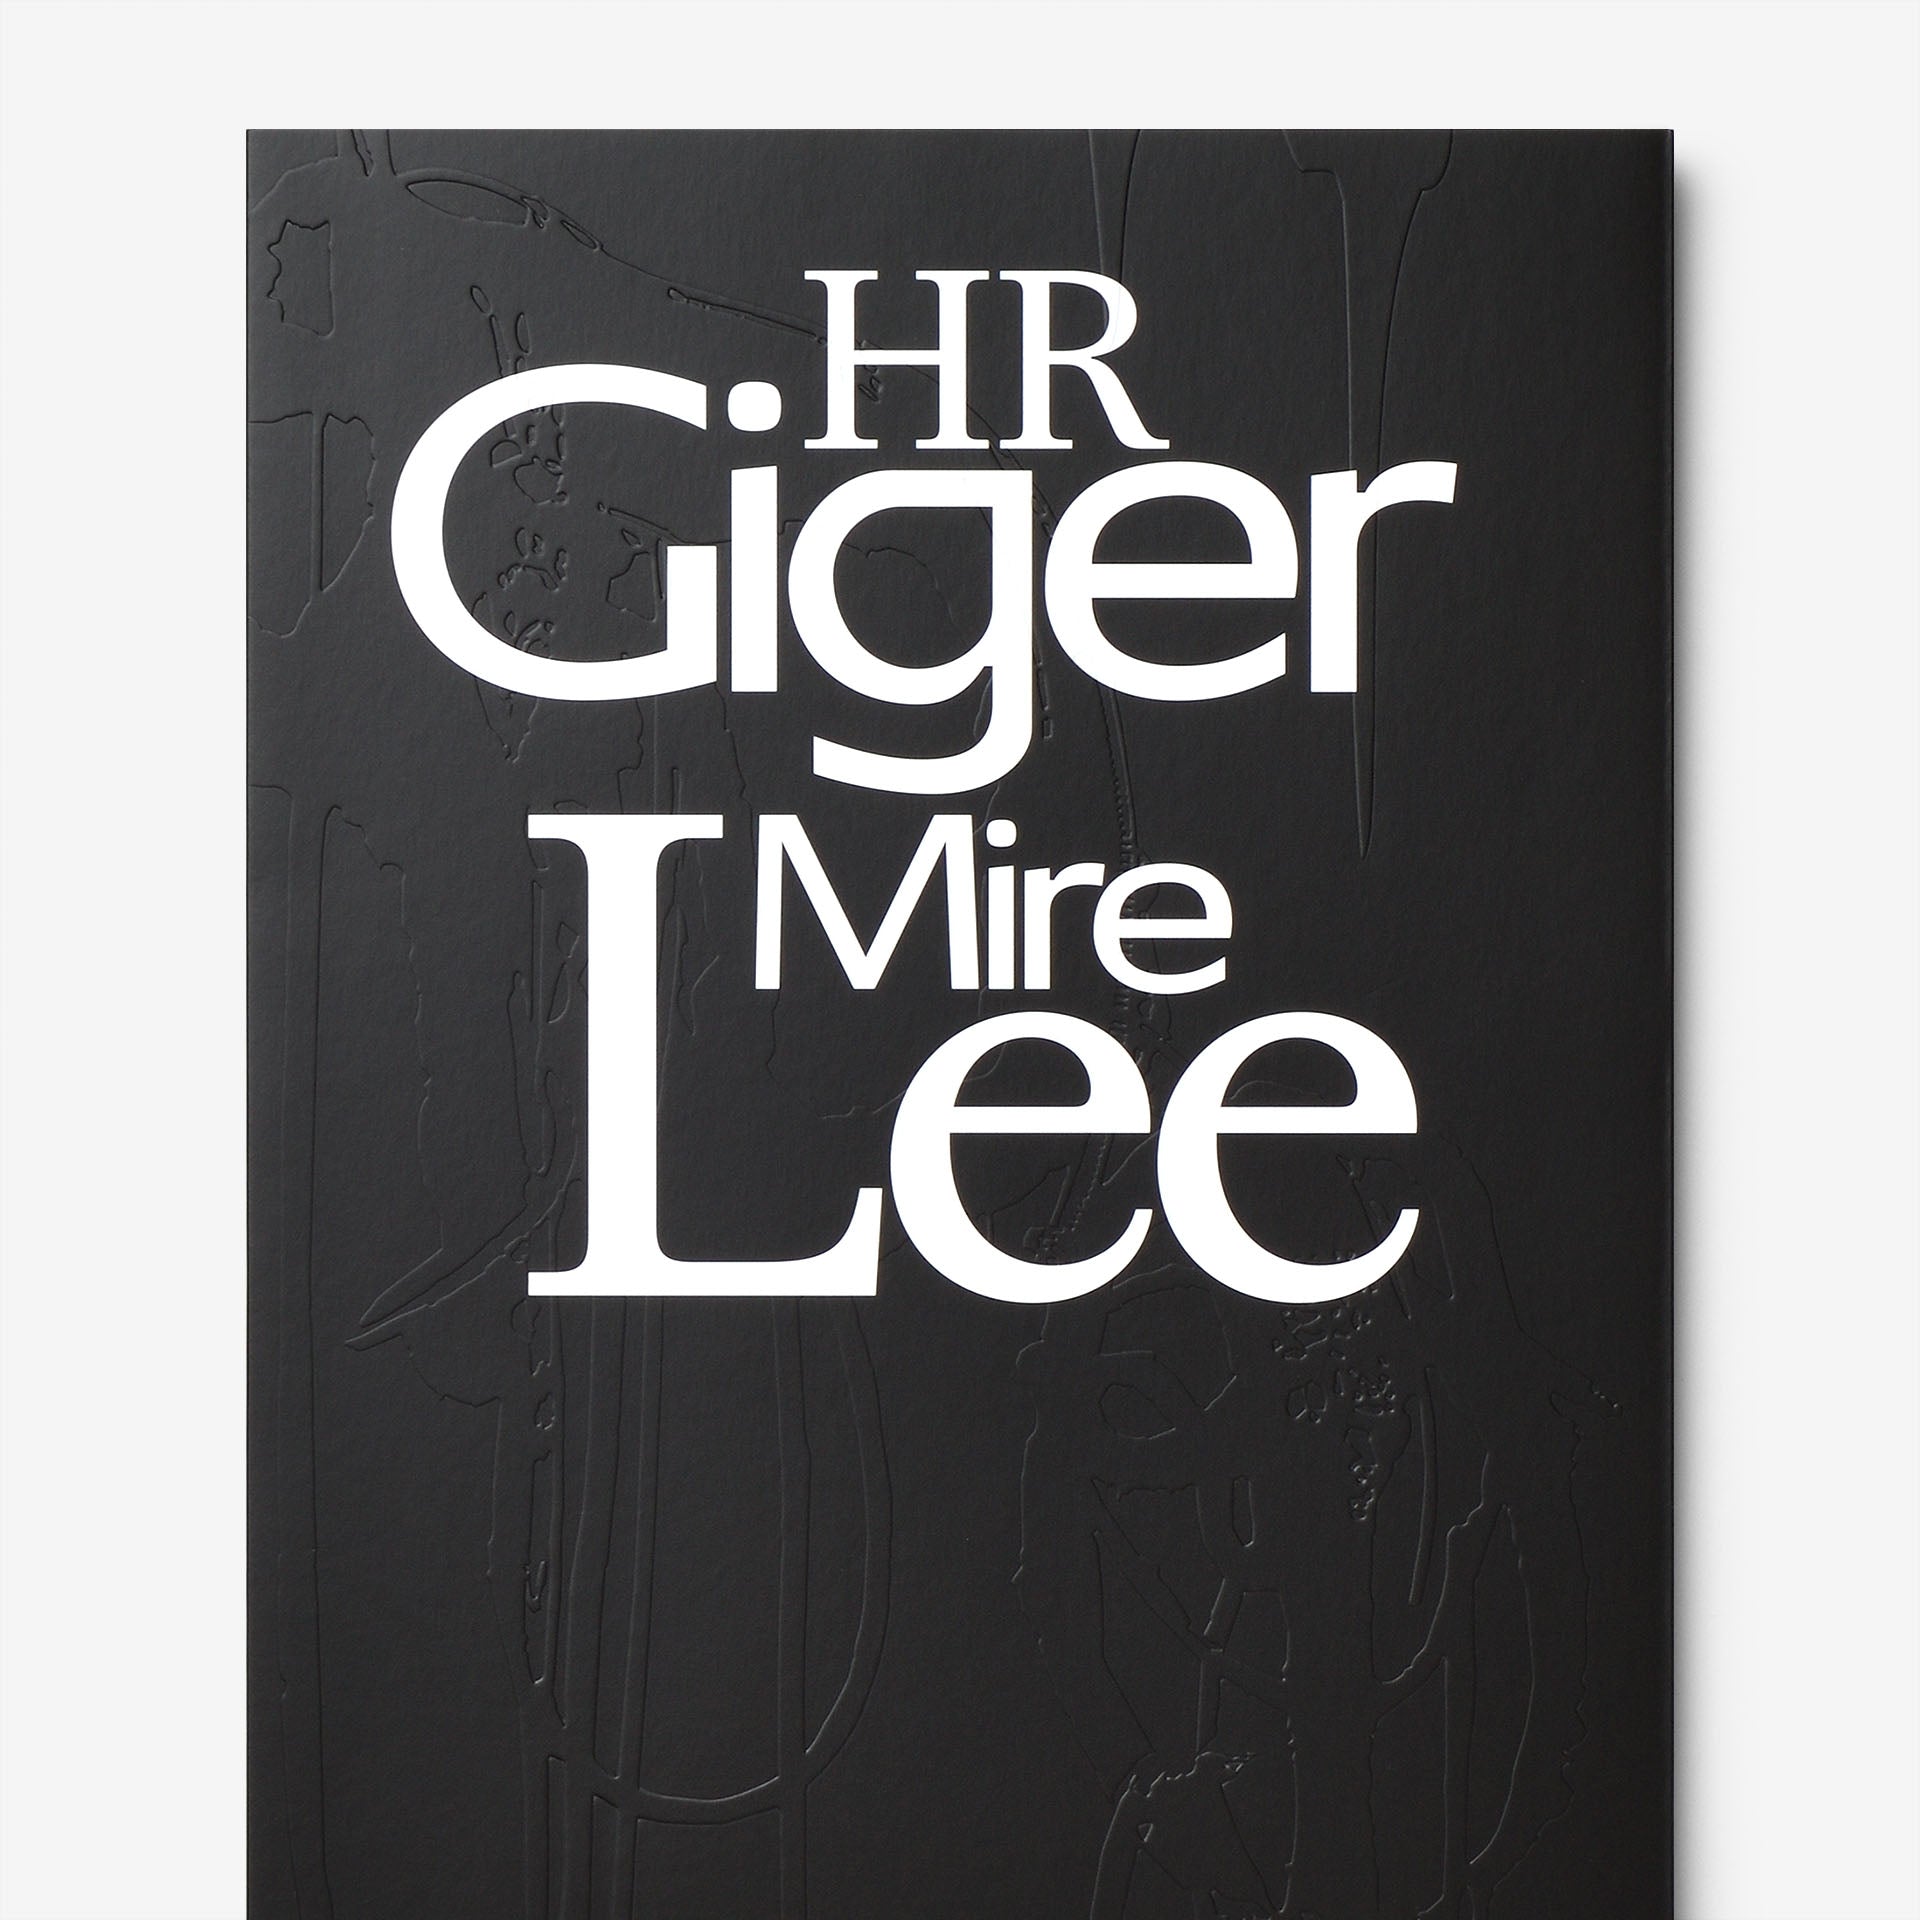 HR Giger & Mire Lee